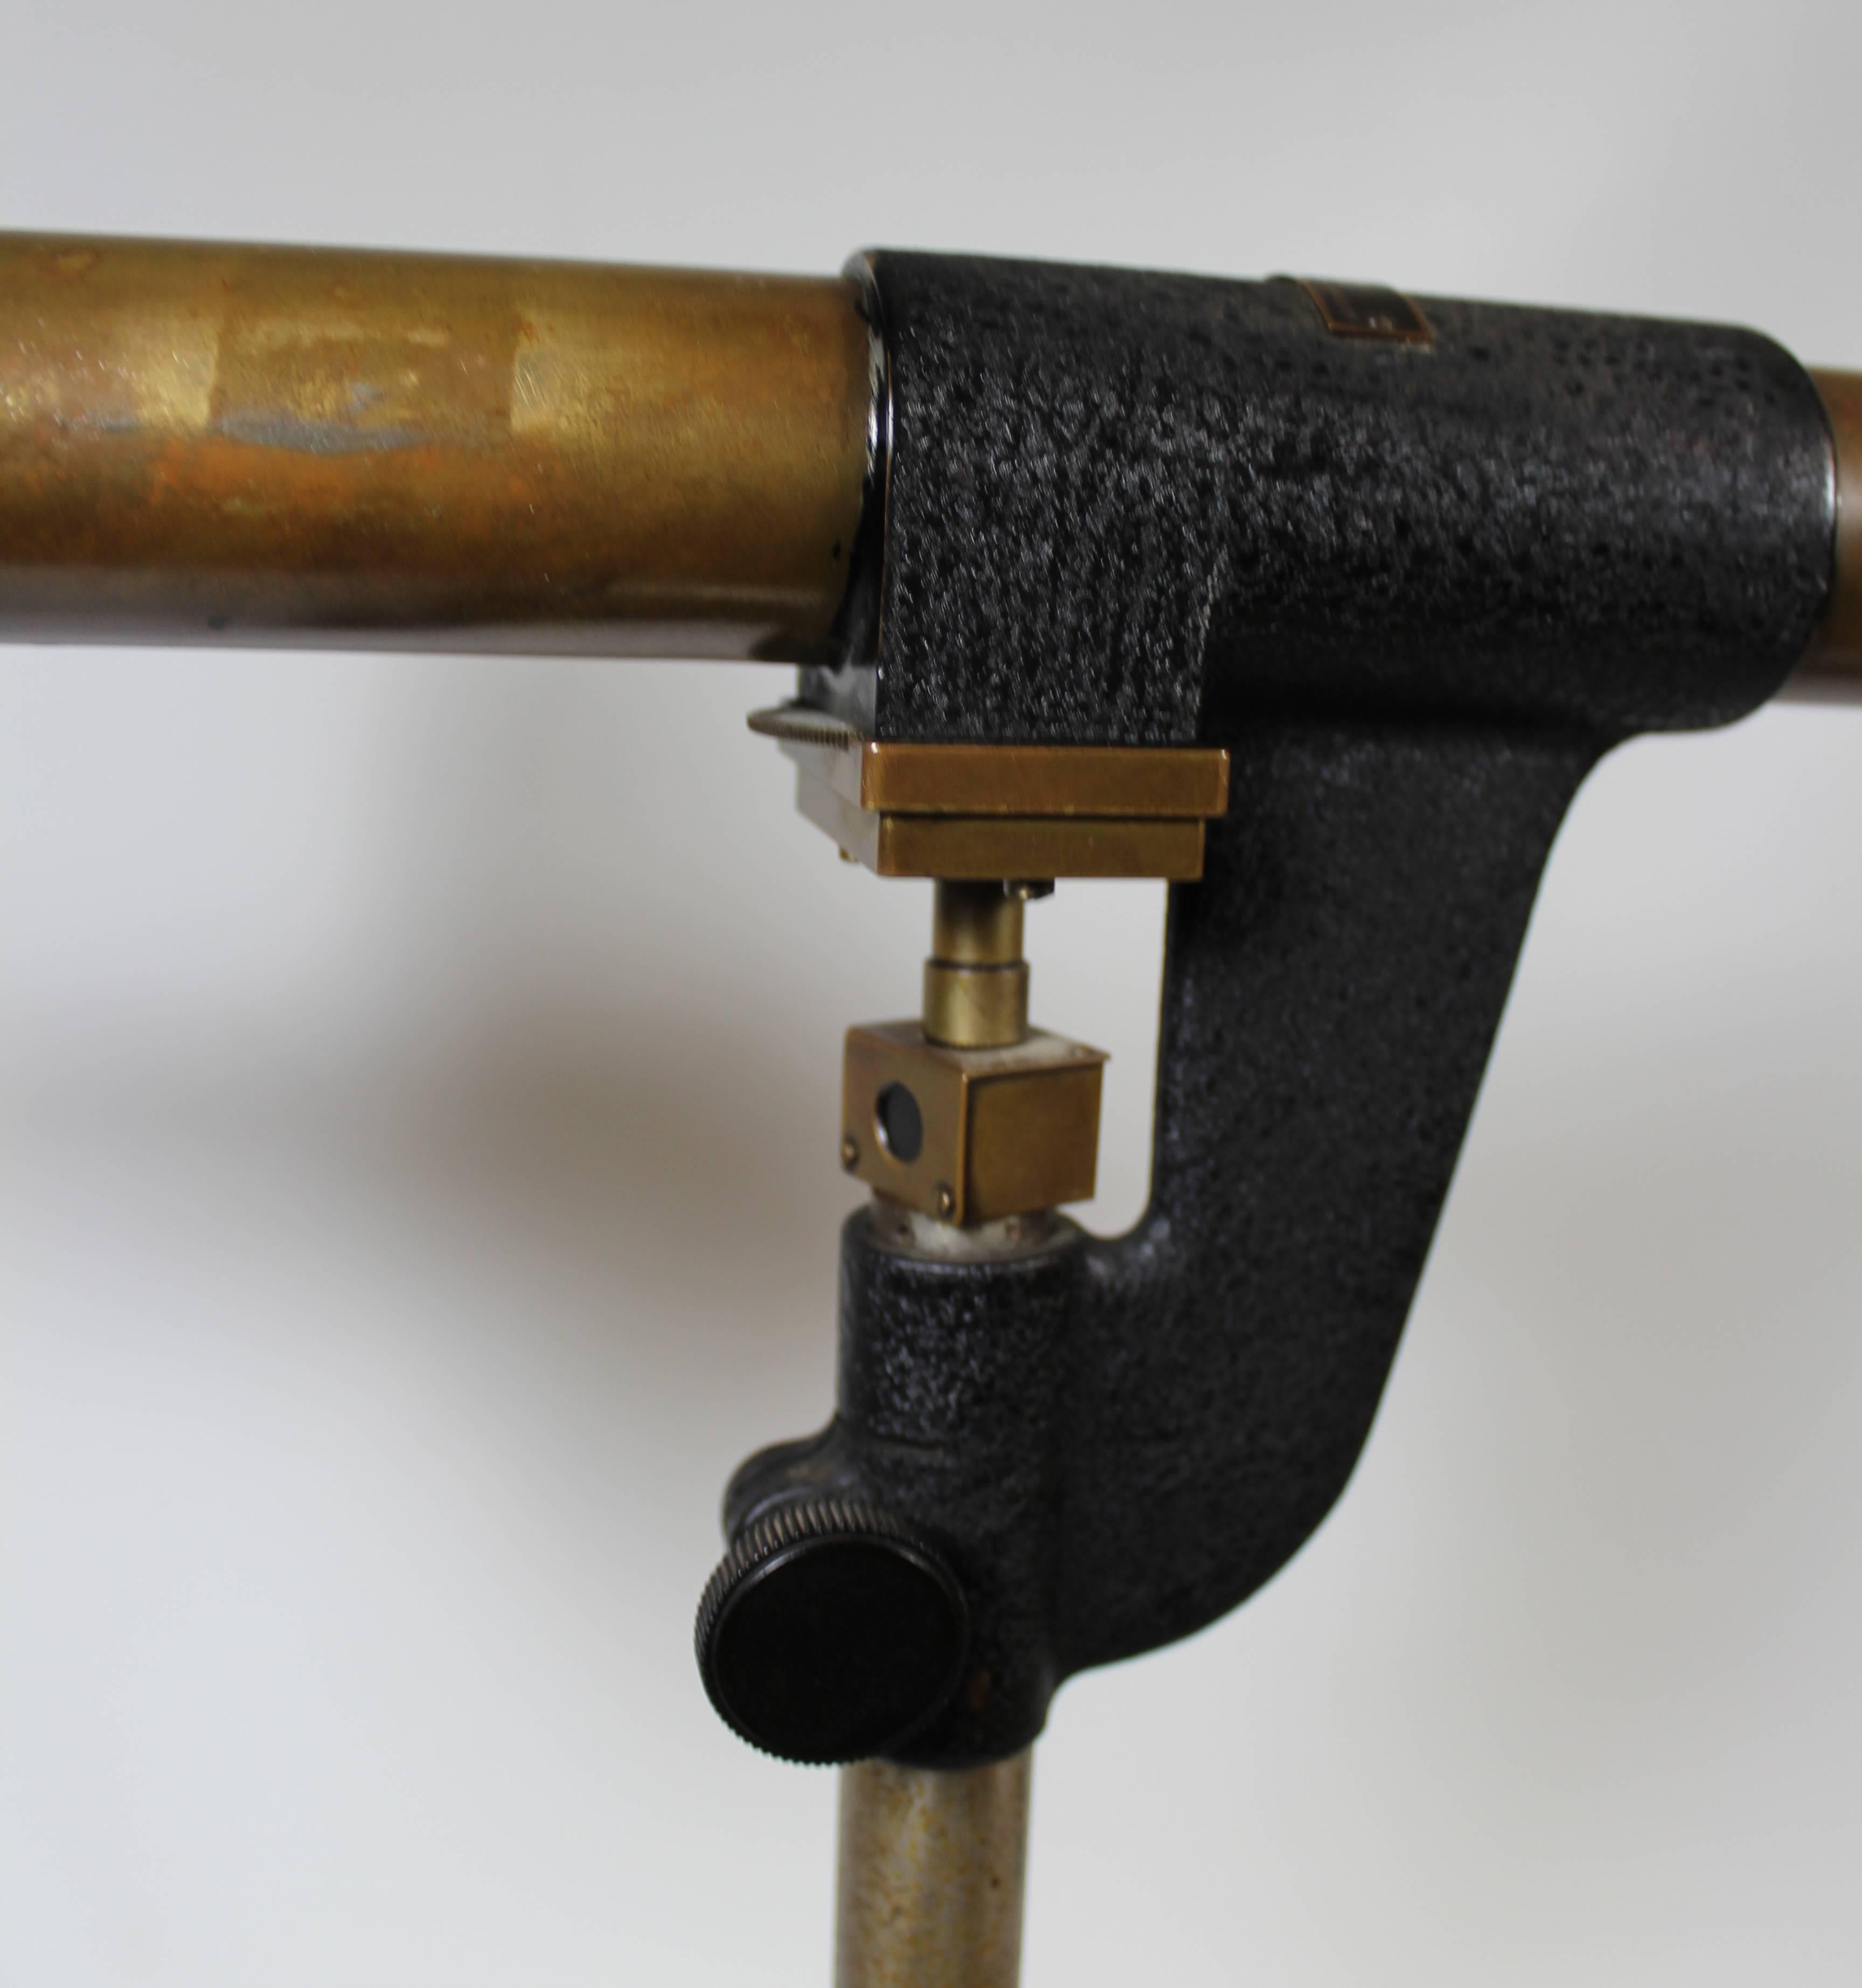 Gaertner Spectroscope, 1930s Scientific Instrument In Good Condition For Sale In Hamilton, Ontario